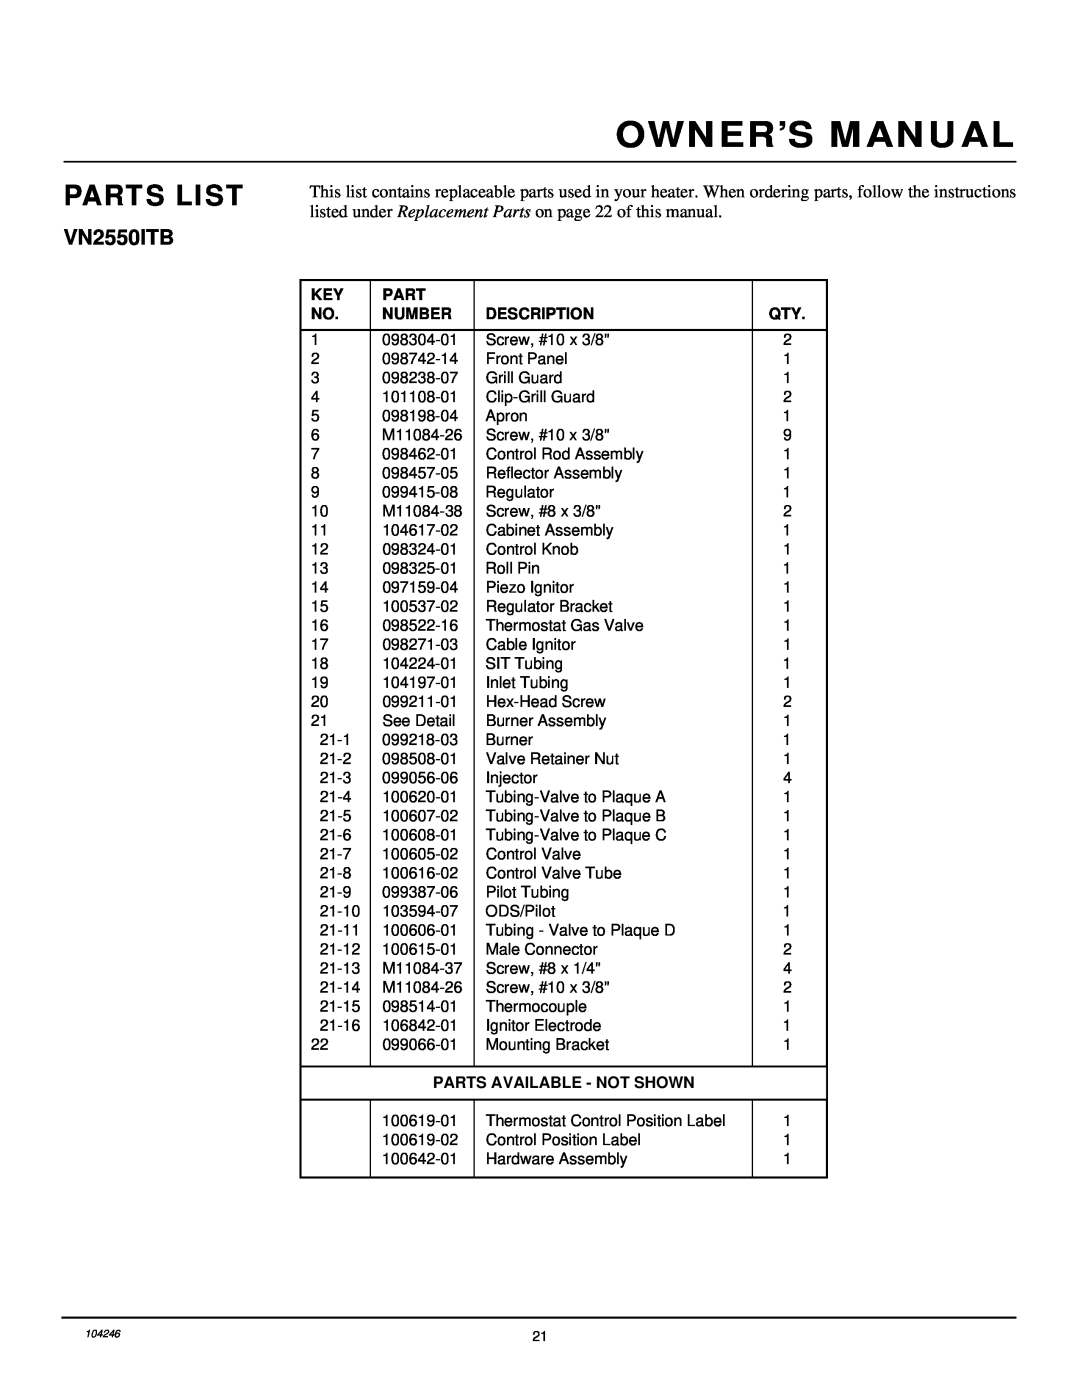 Vanguard Heating VN1800ITB installation manual Parts List, VN2550ITB 